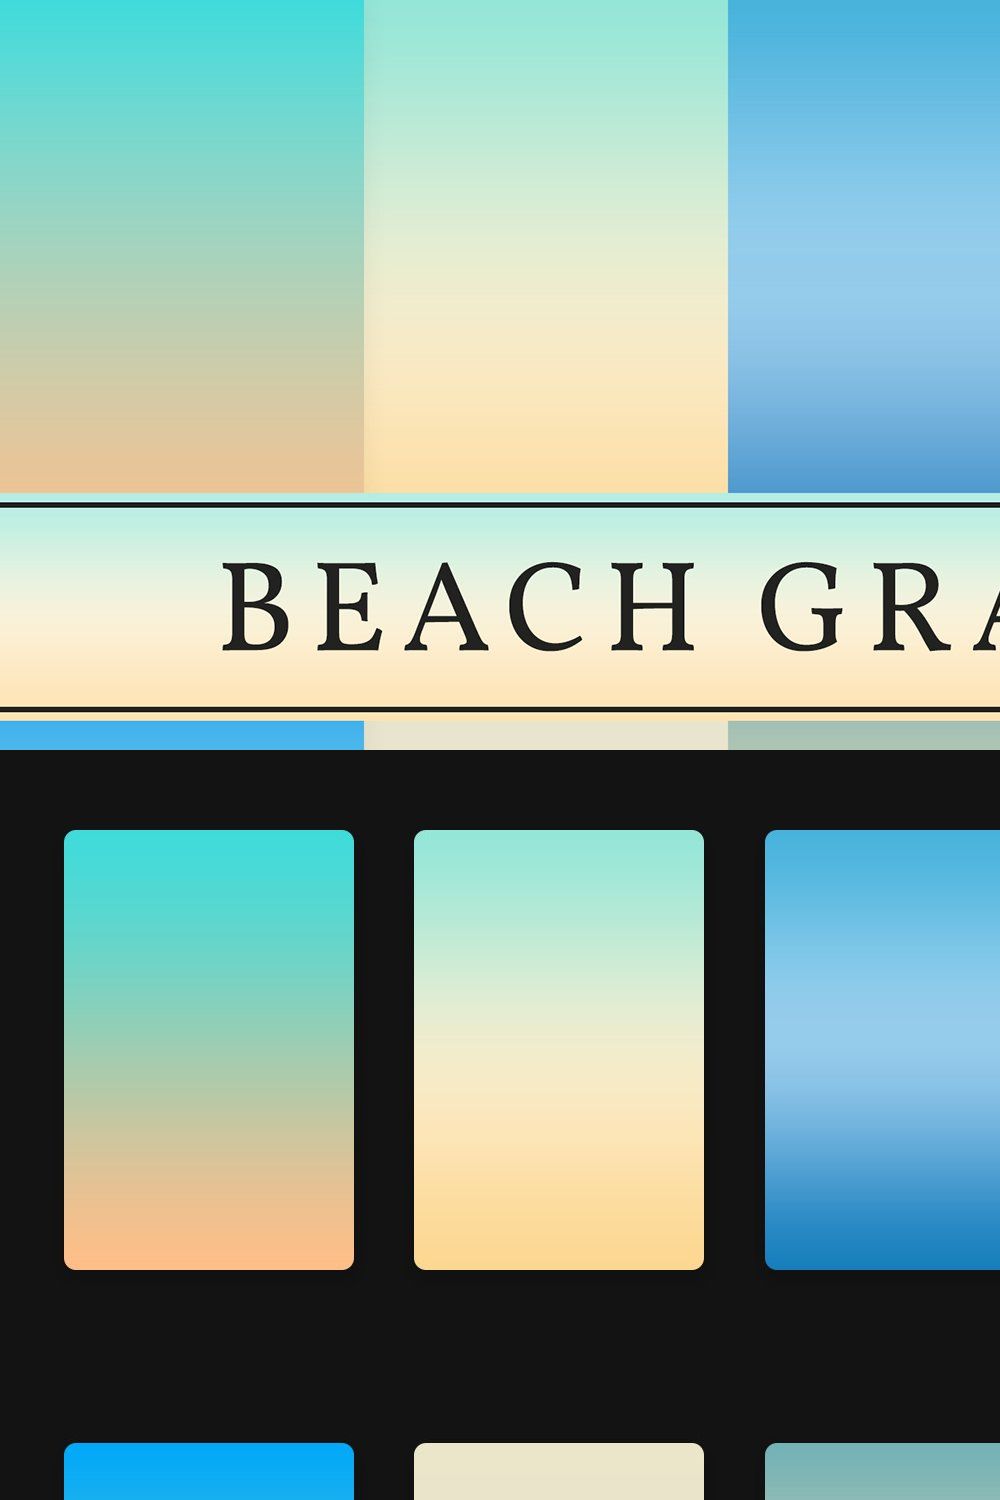 Beach Gradients pinterest preview image.